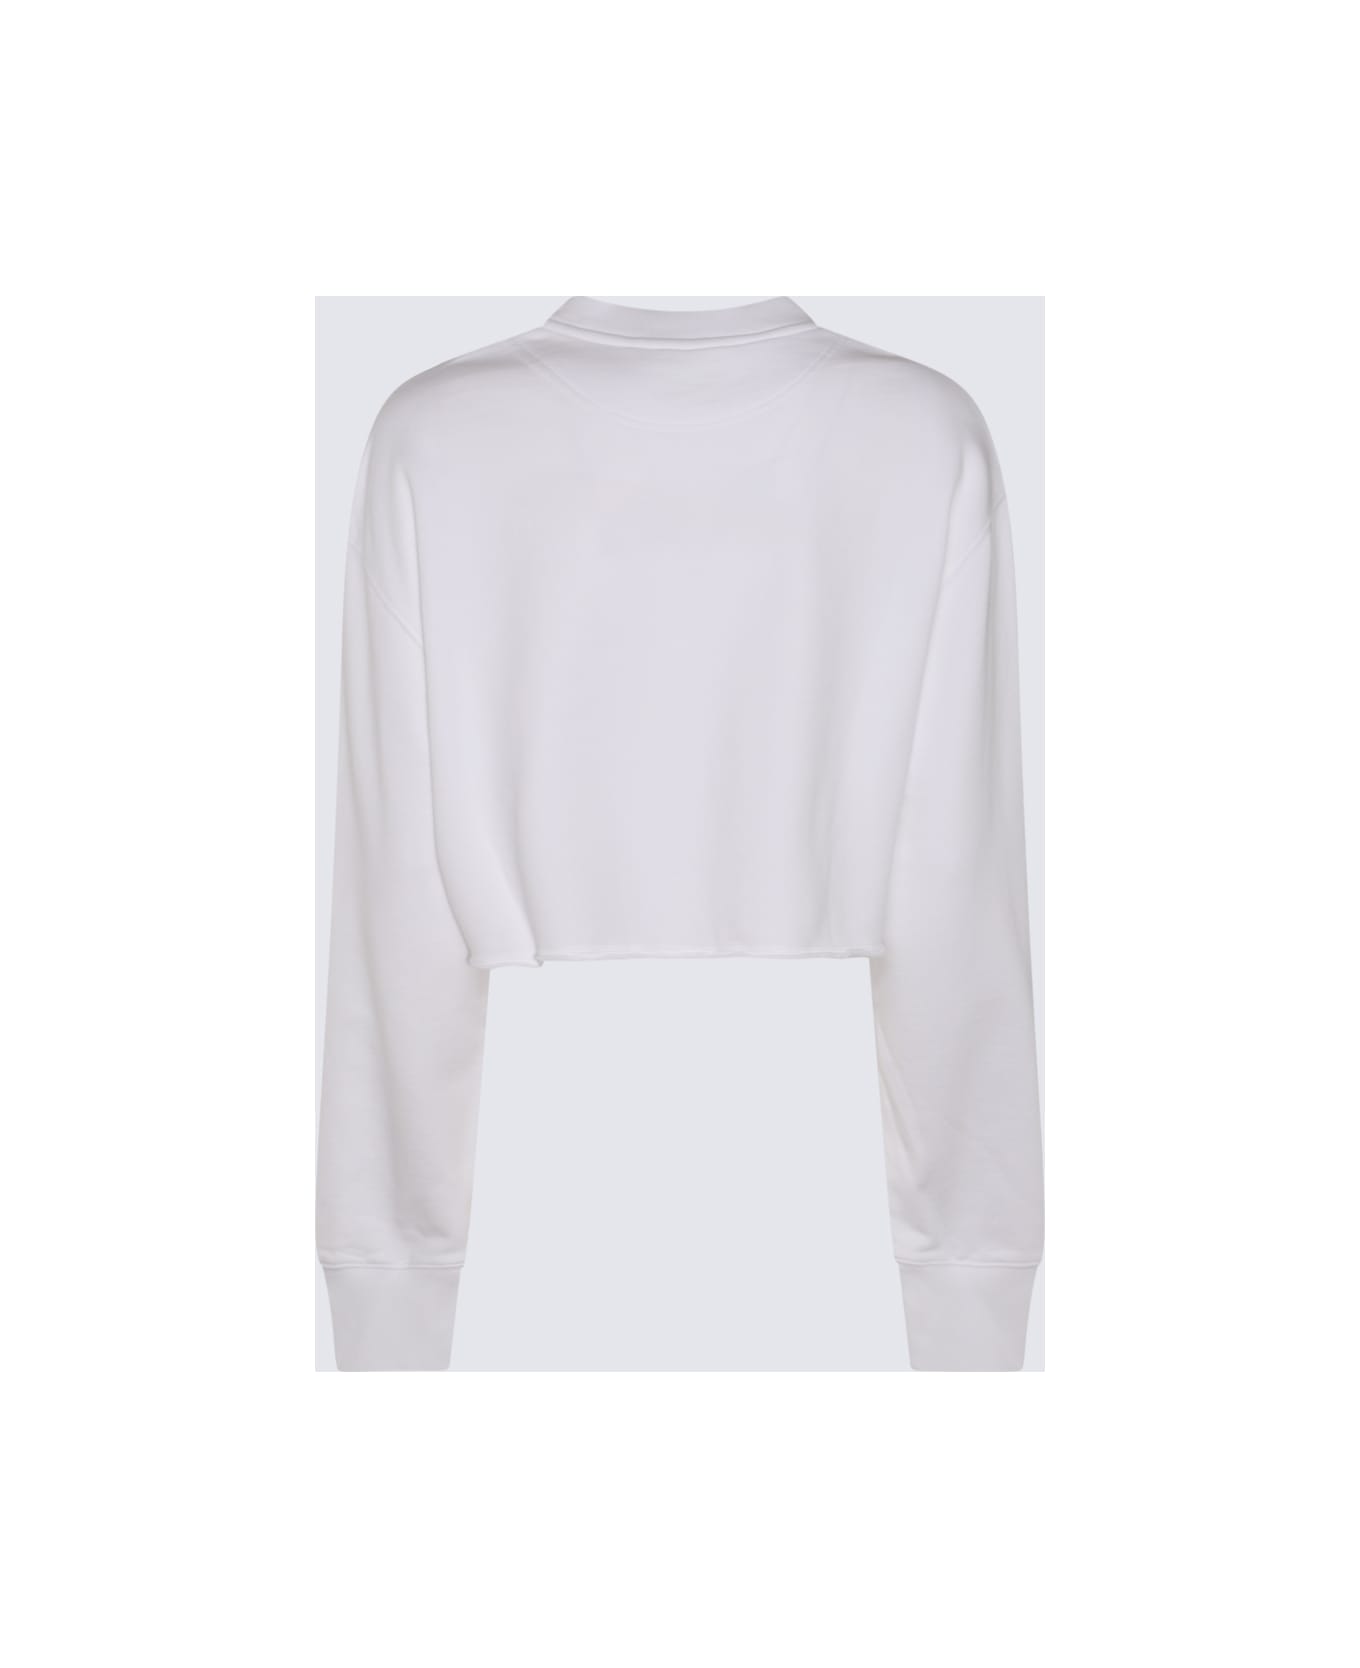 Stella McCartney White Cotton Sweatshirt - PURE WHITE